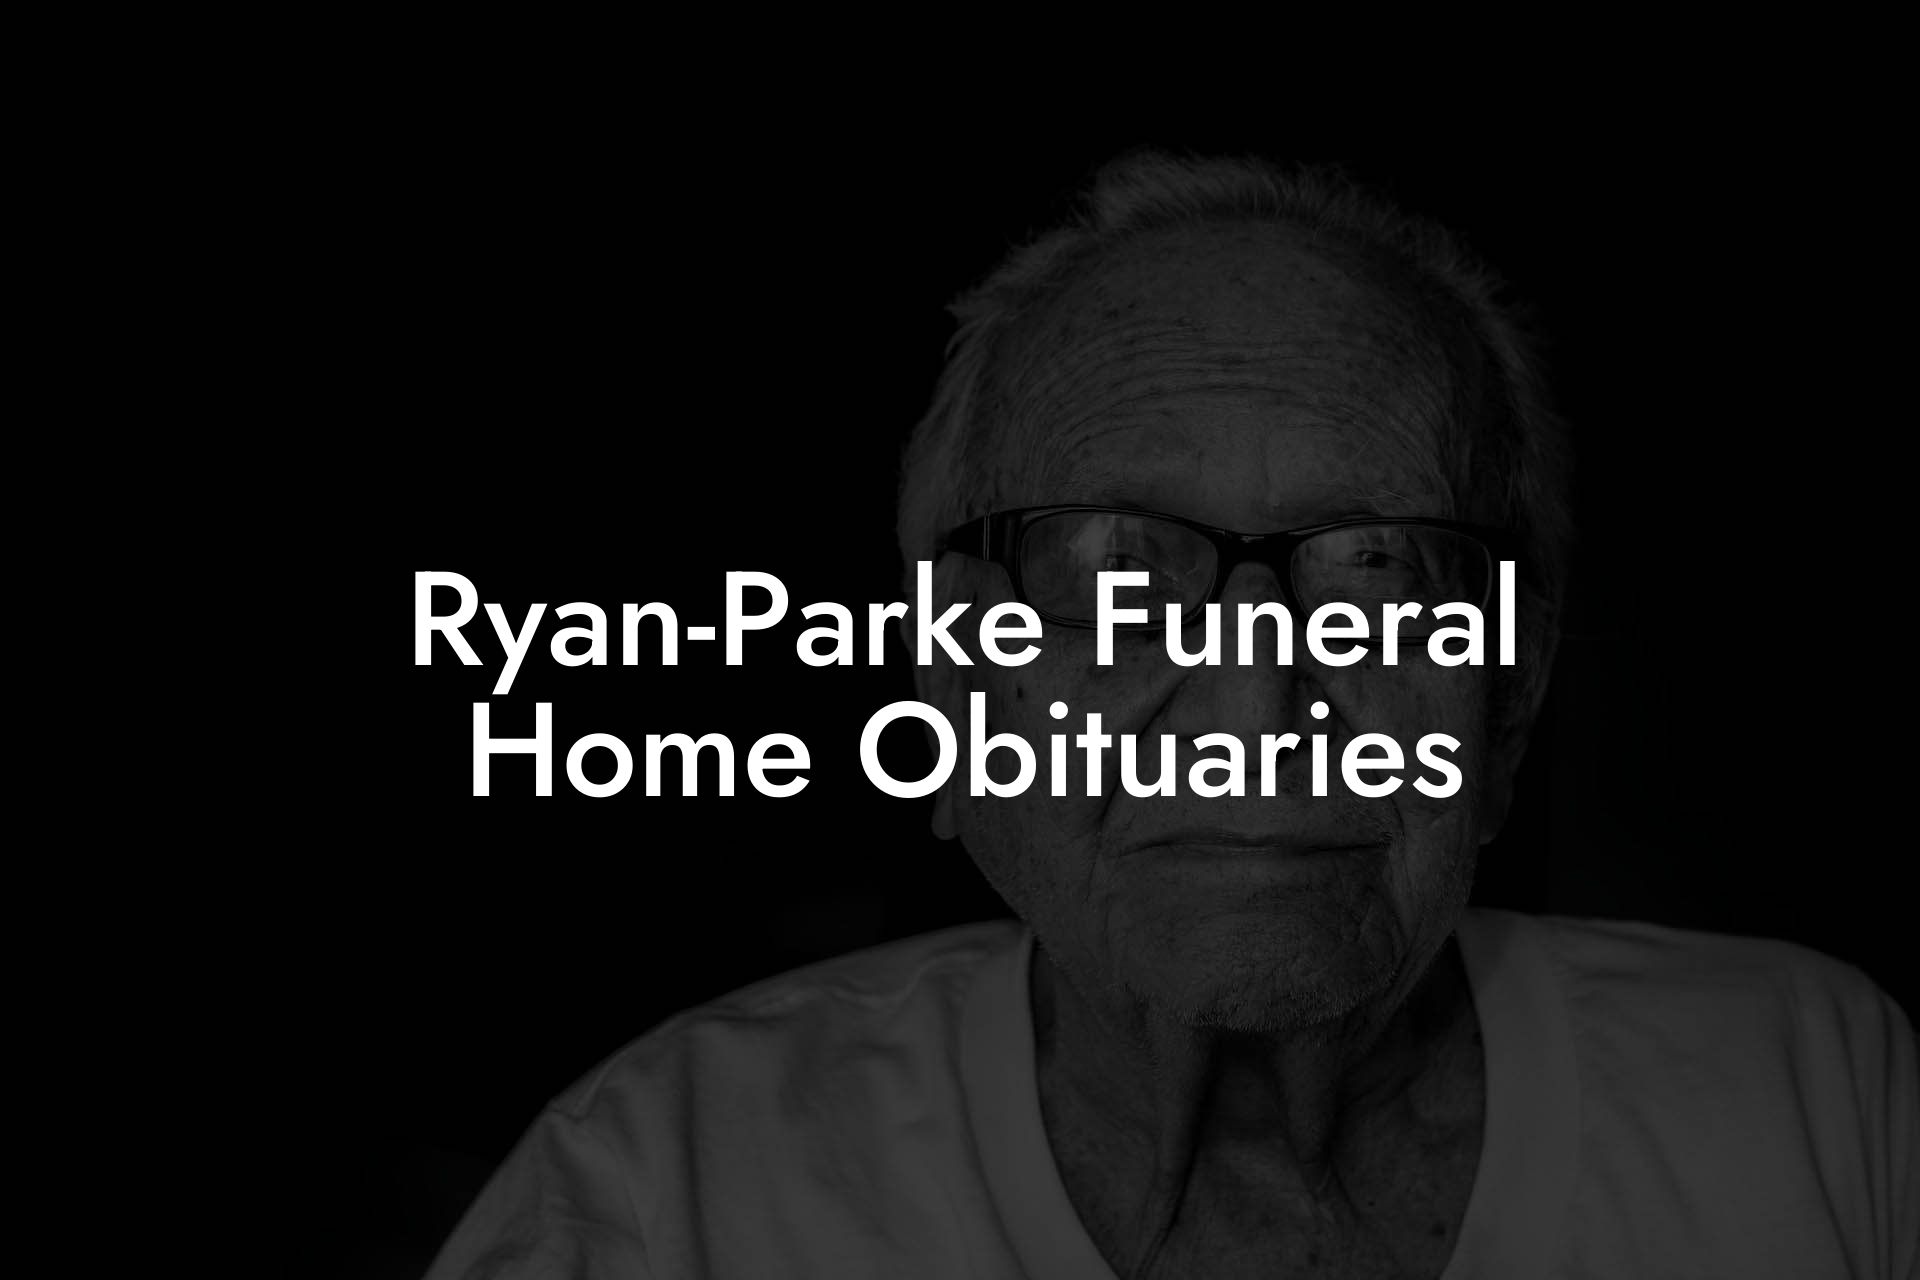 Ryan-Parke Funeral Home Obituaries